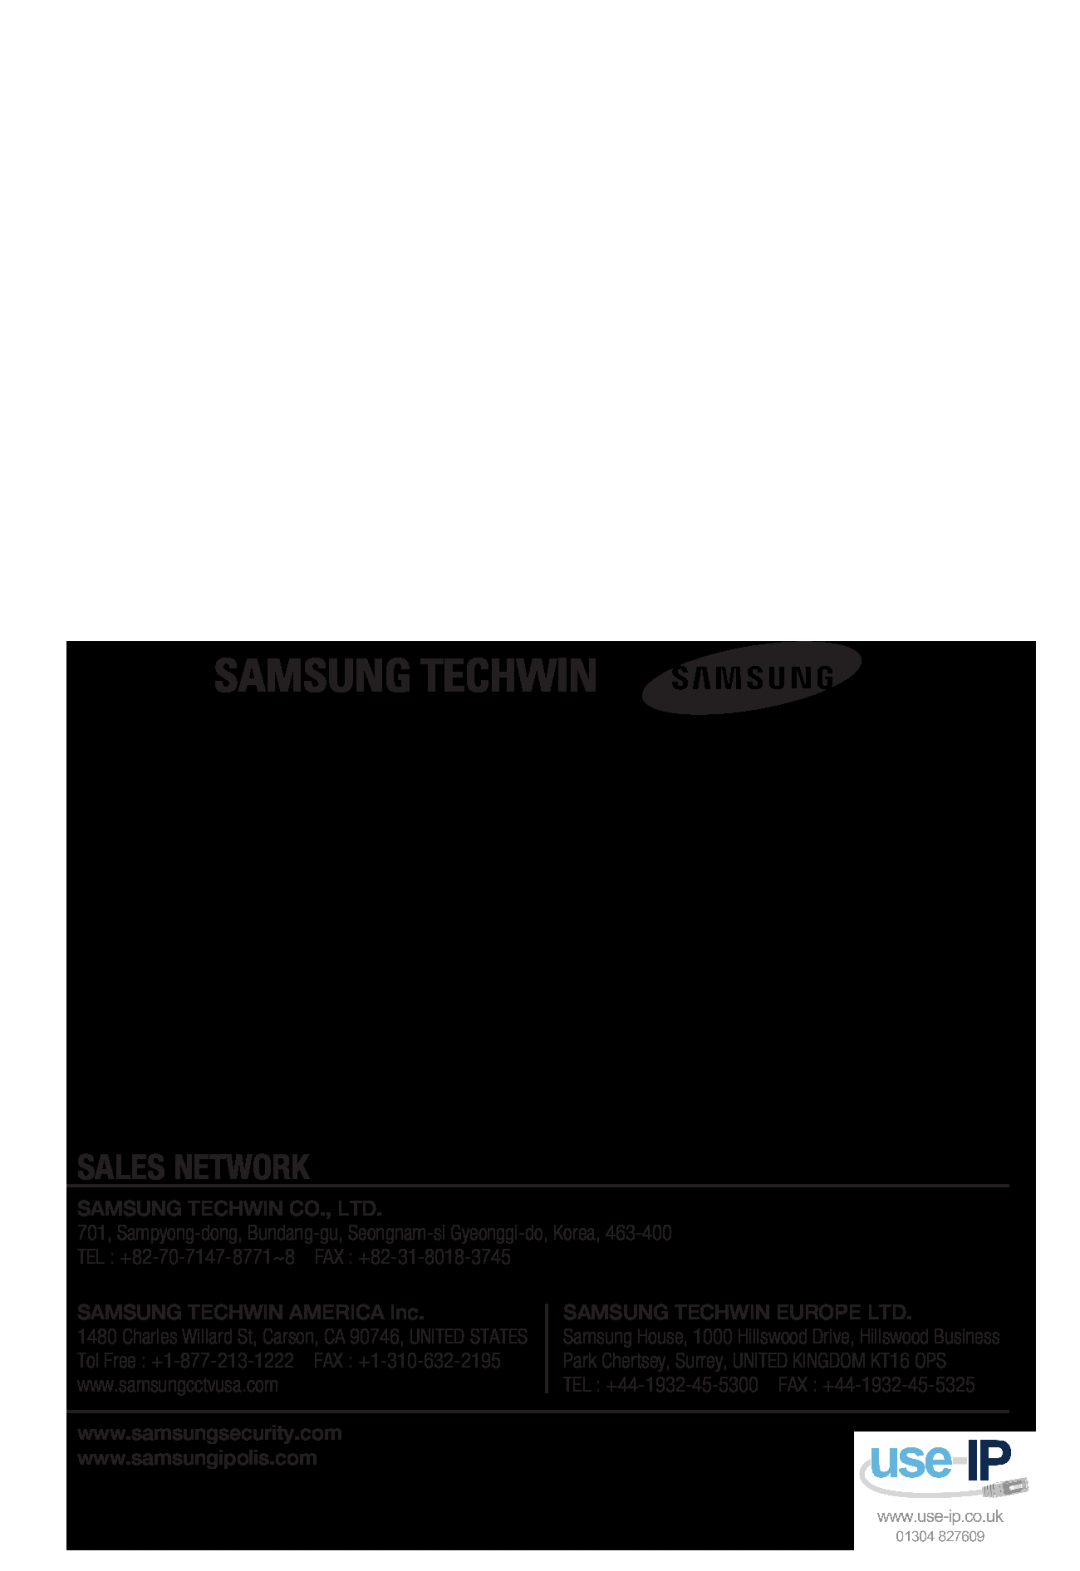 Samsung SND-5080, SNV-5080 Sales Network, SAMSUNG TECHWIN AMERICA Inc, TEL +44-1932-45-5300 FAX +44-1932-45-5325, VAN 10 